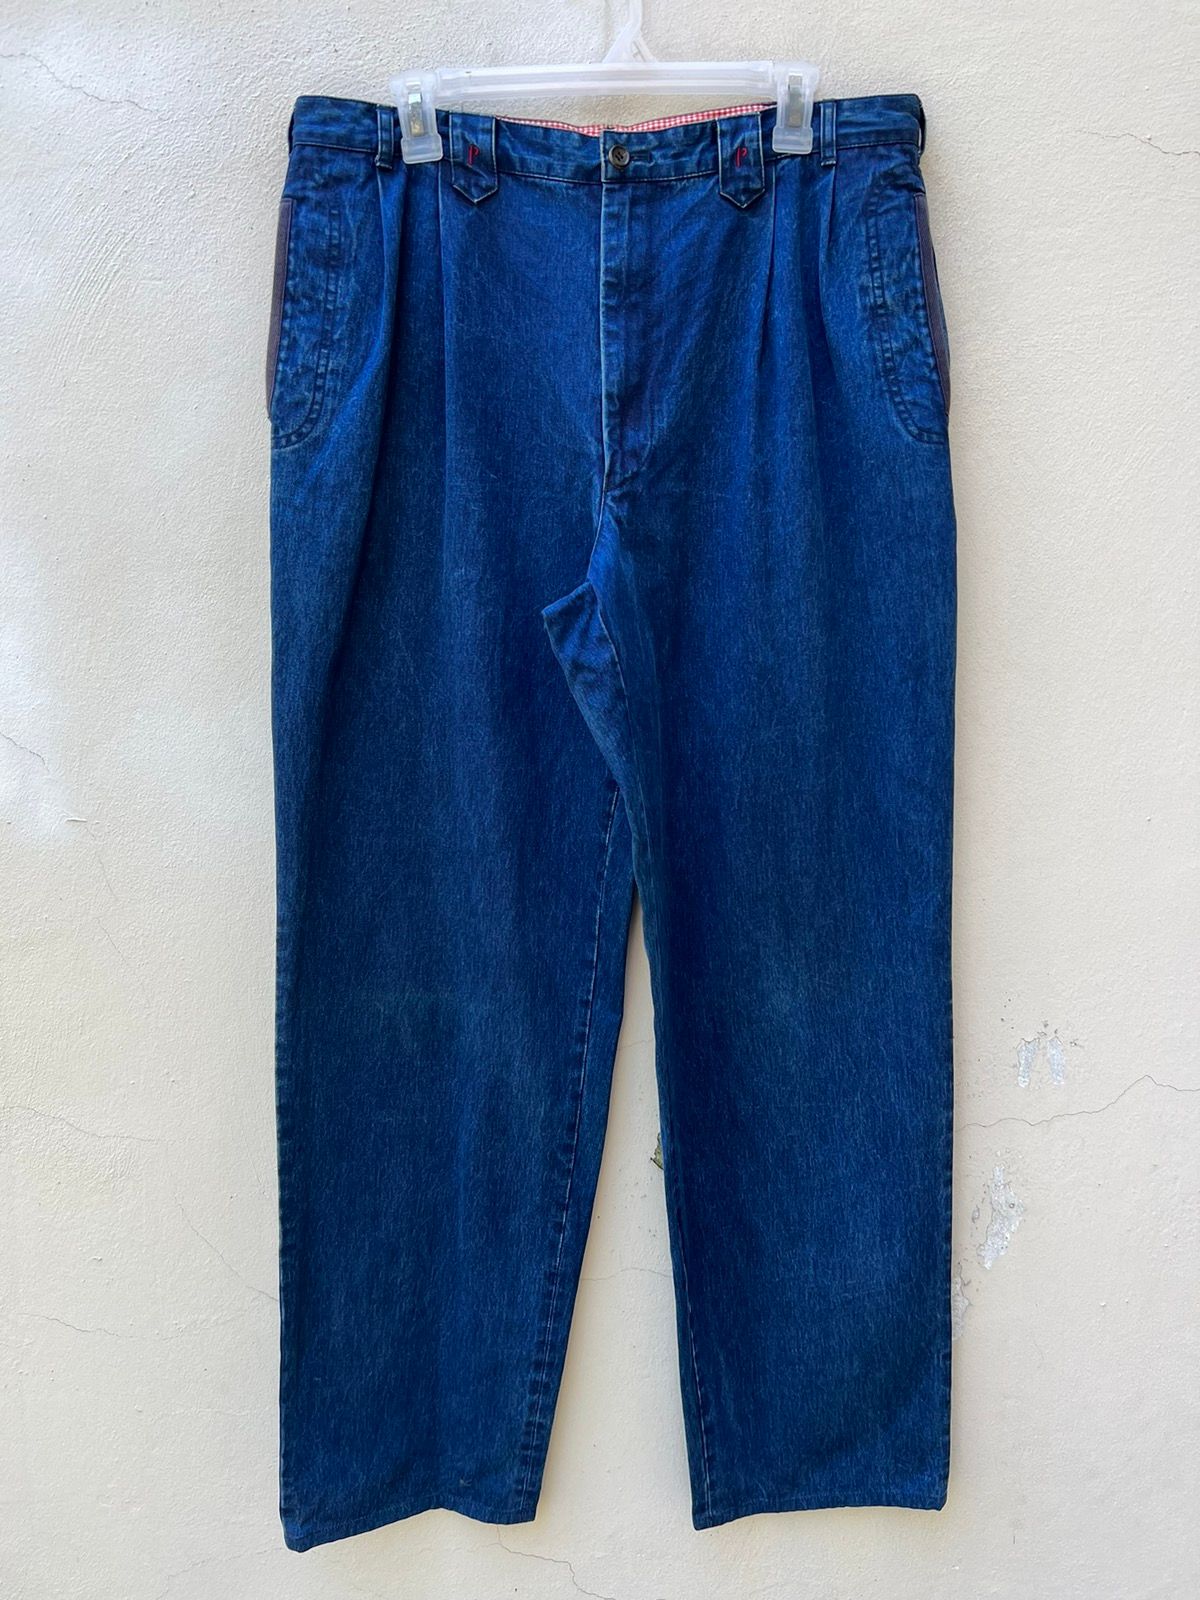 Orslow Vintage Papas Japan Sun Faded Indigo Blue Baggy Chinos Pant Size US 34 / EU 50 - 6 Thumbnail